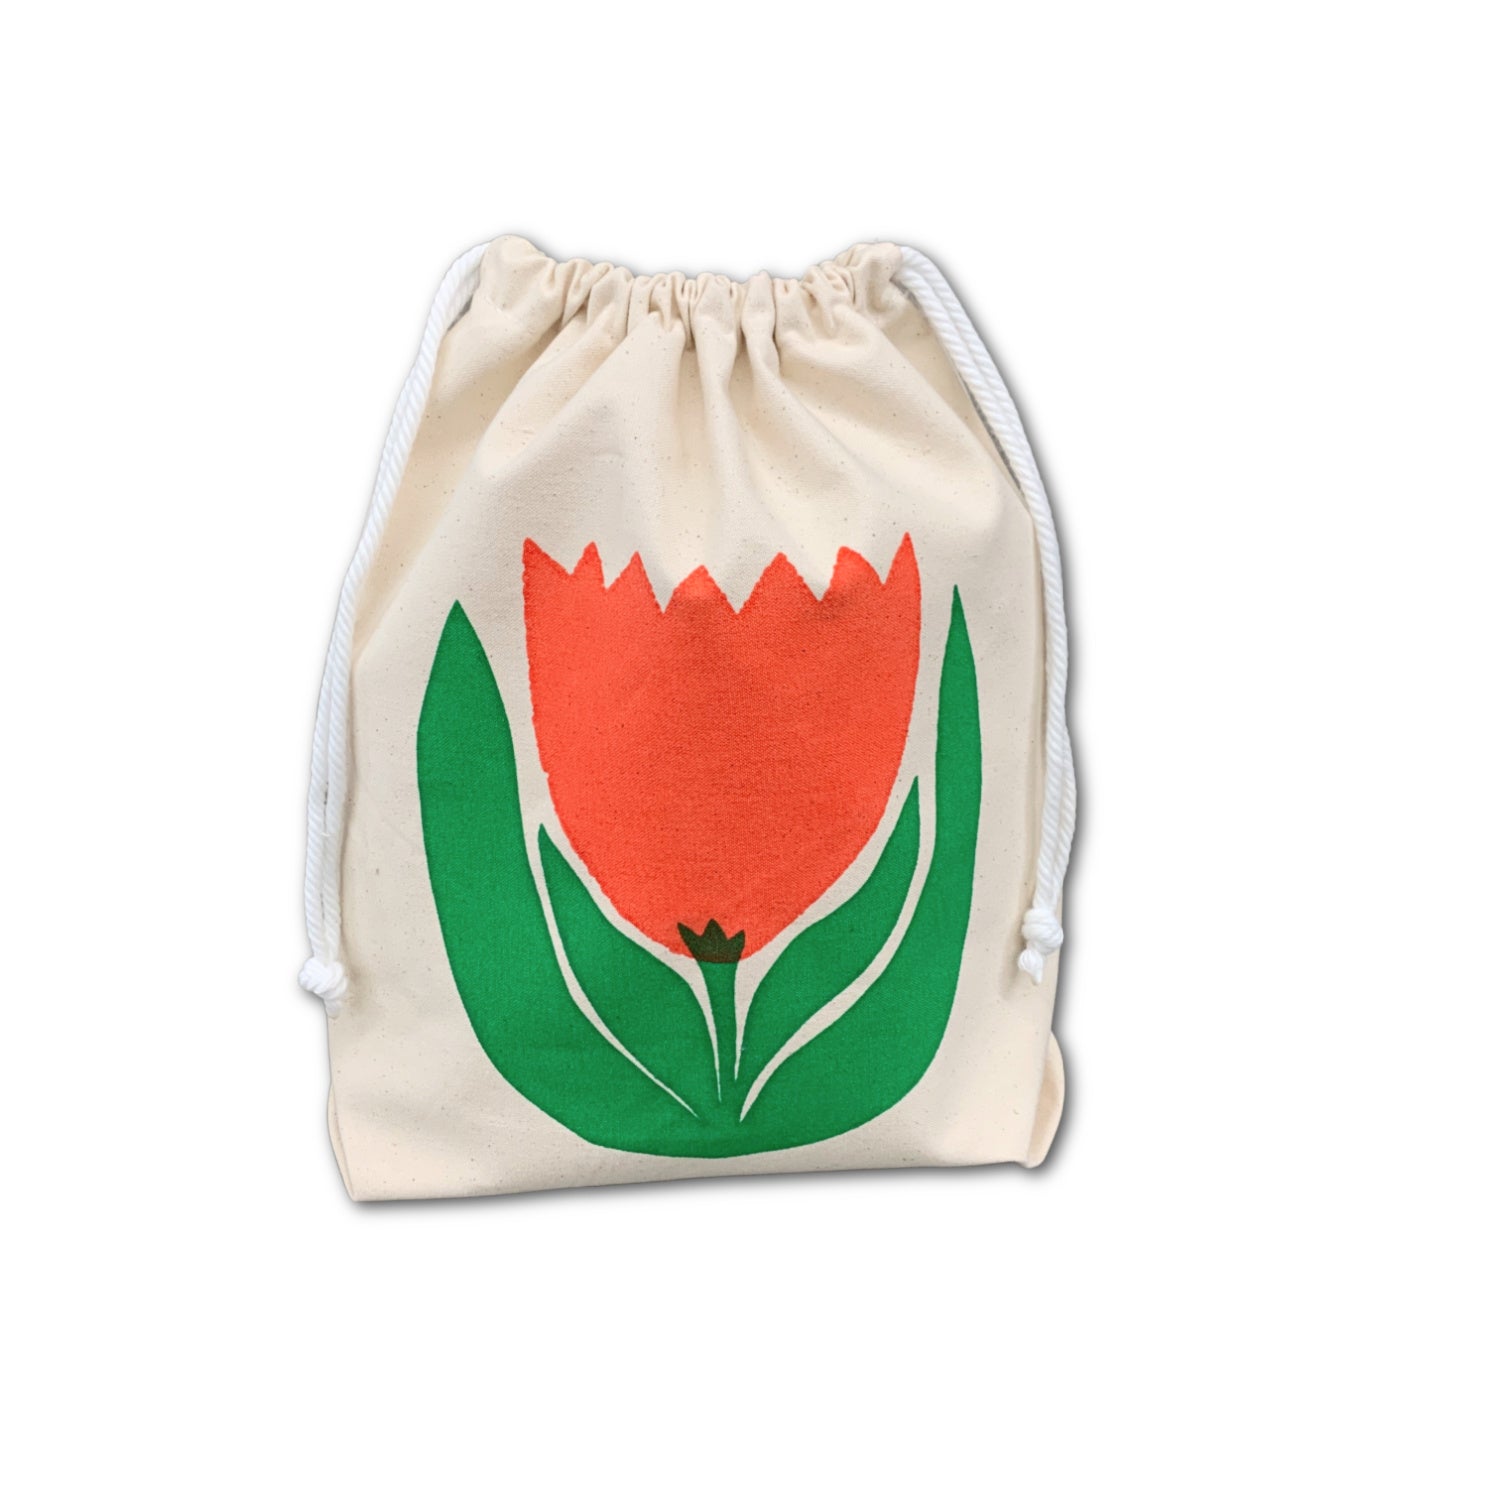 Project Bag - 'Tulip'